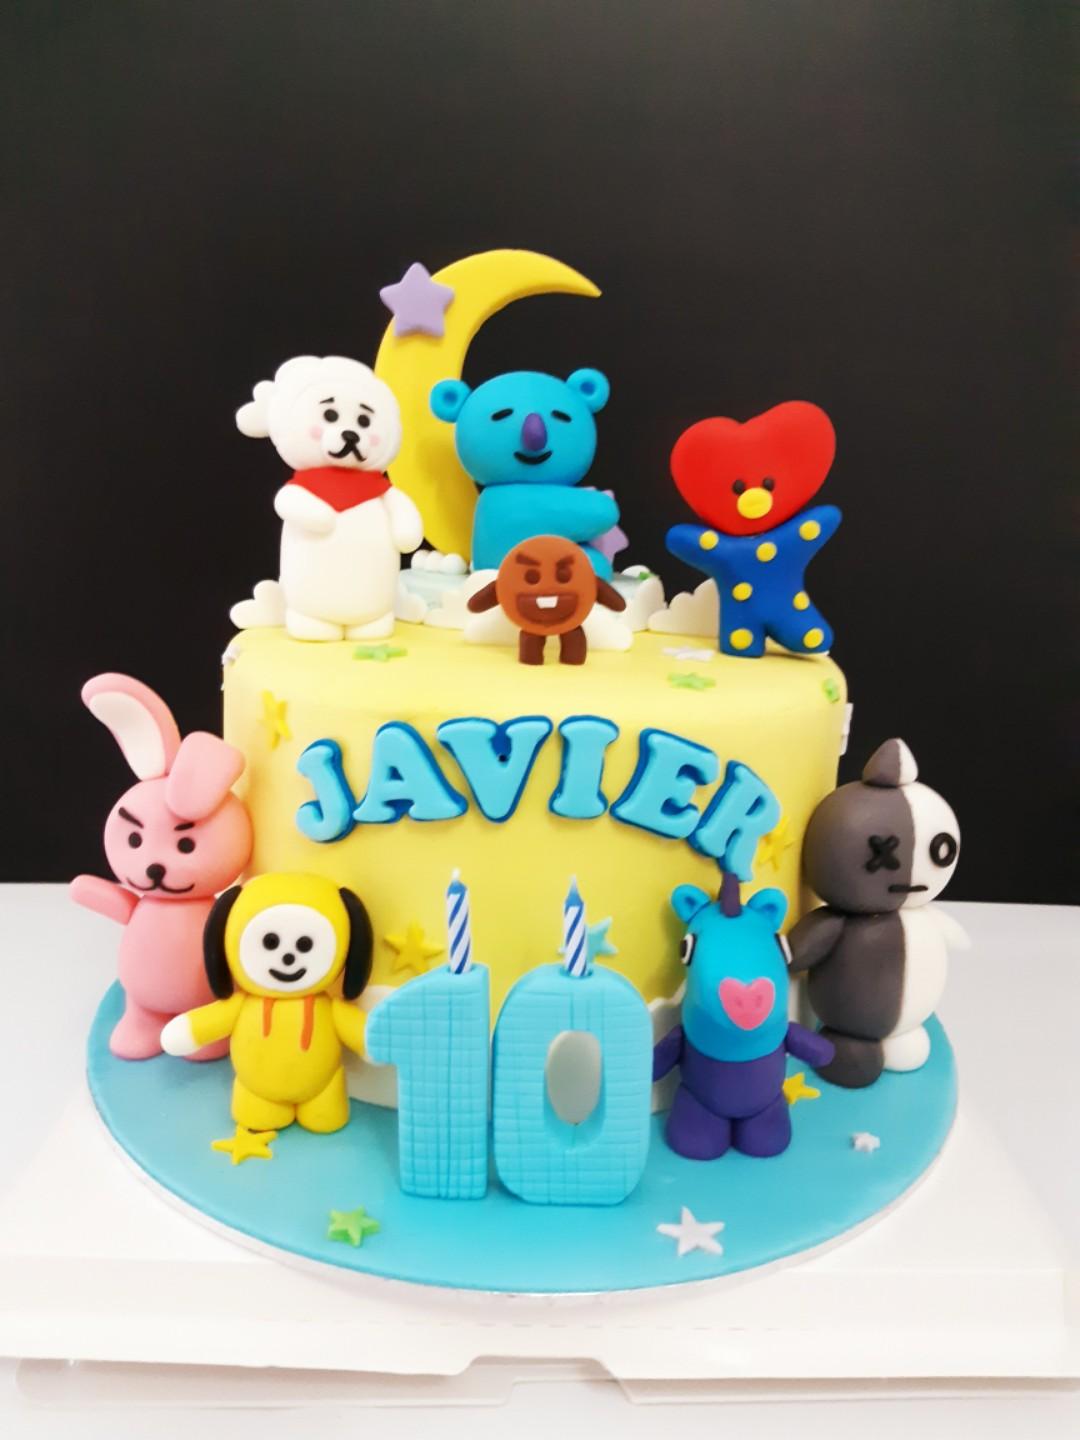 BTS Theme Cake Designs & Images